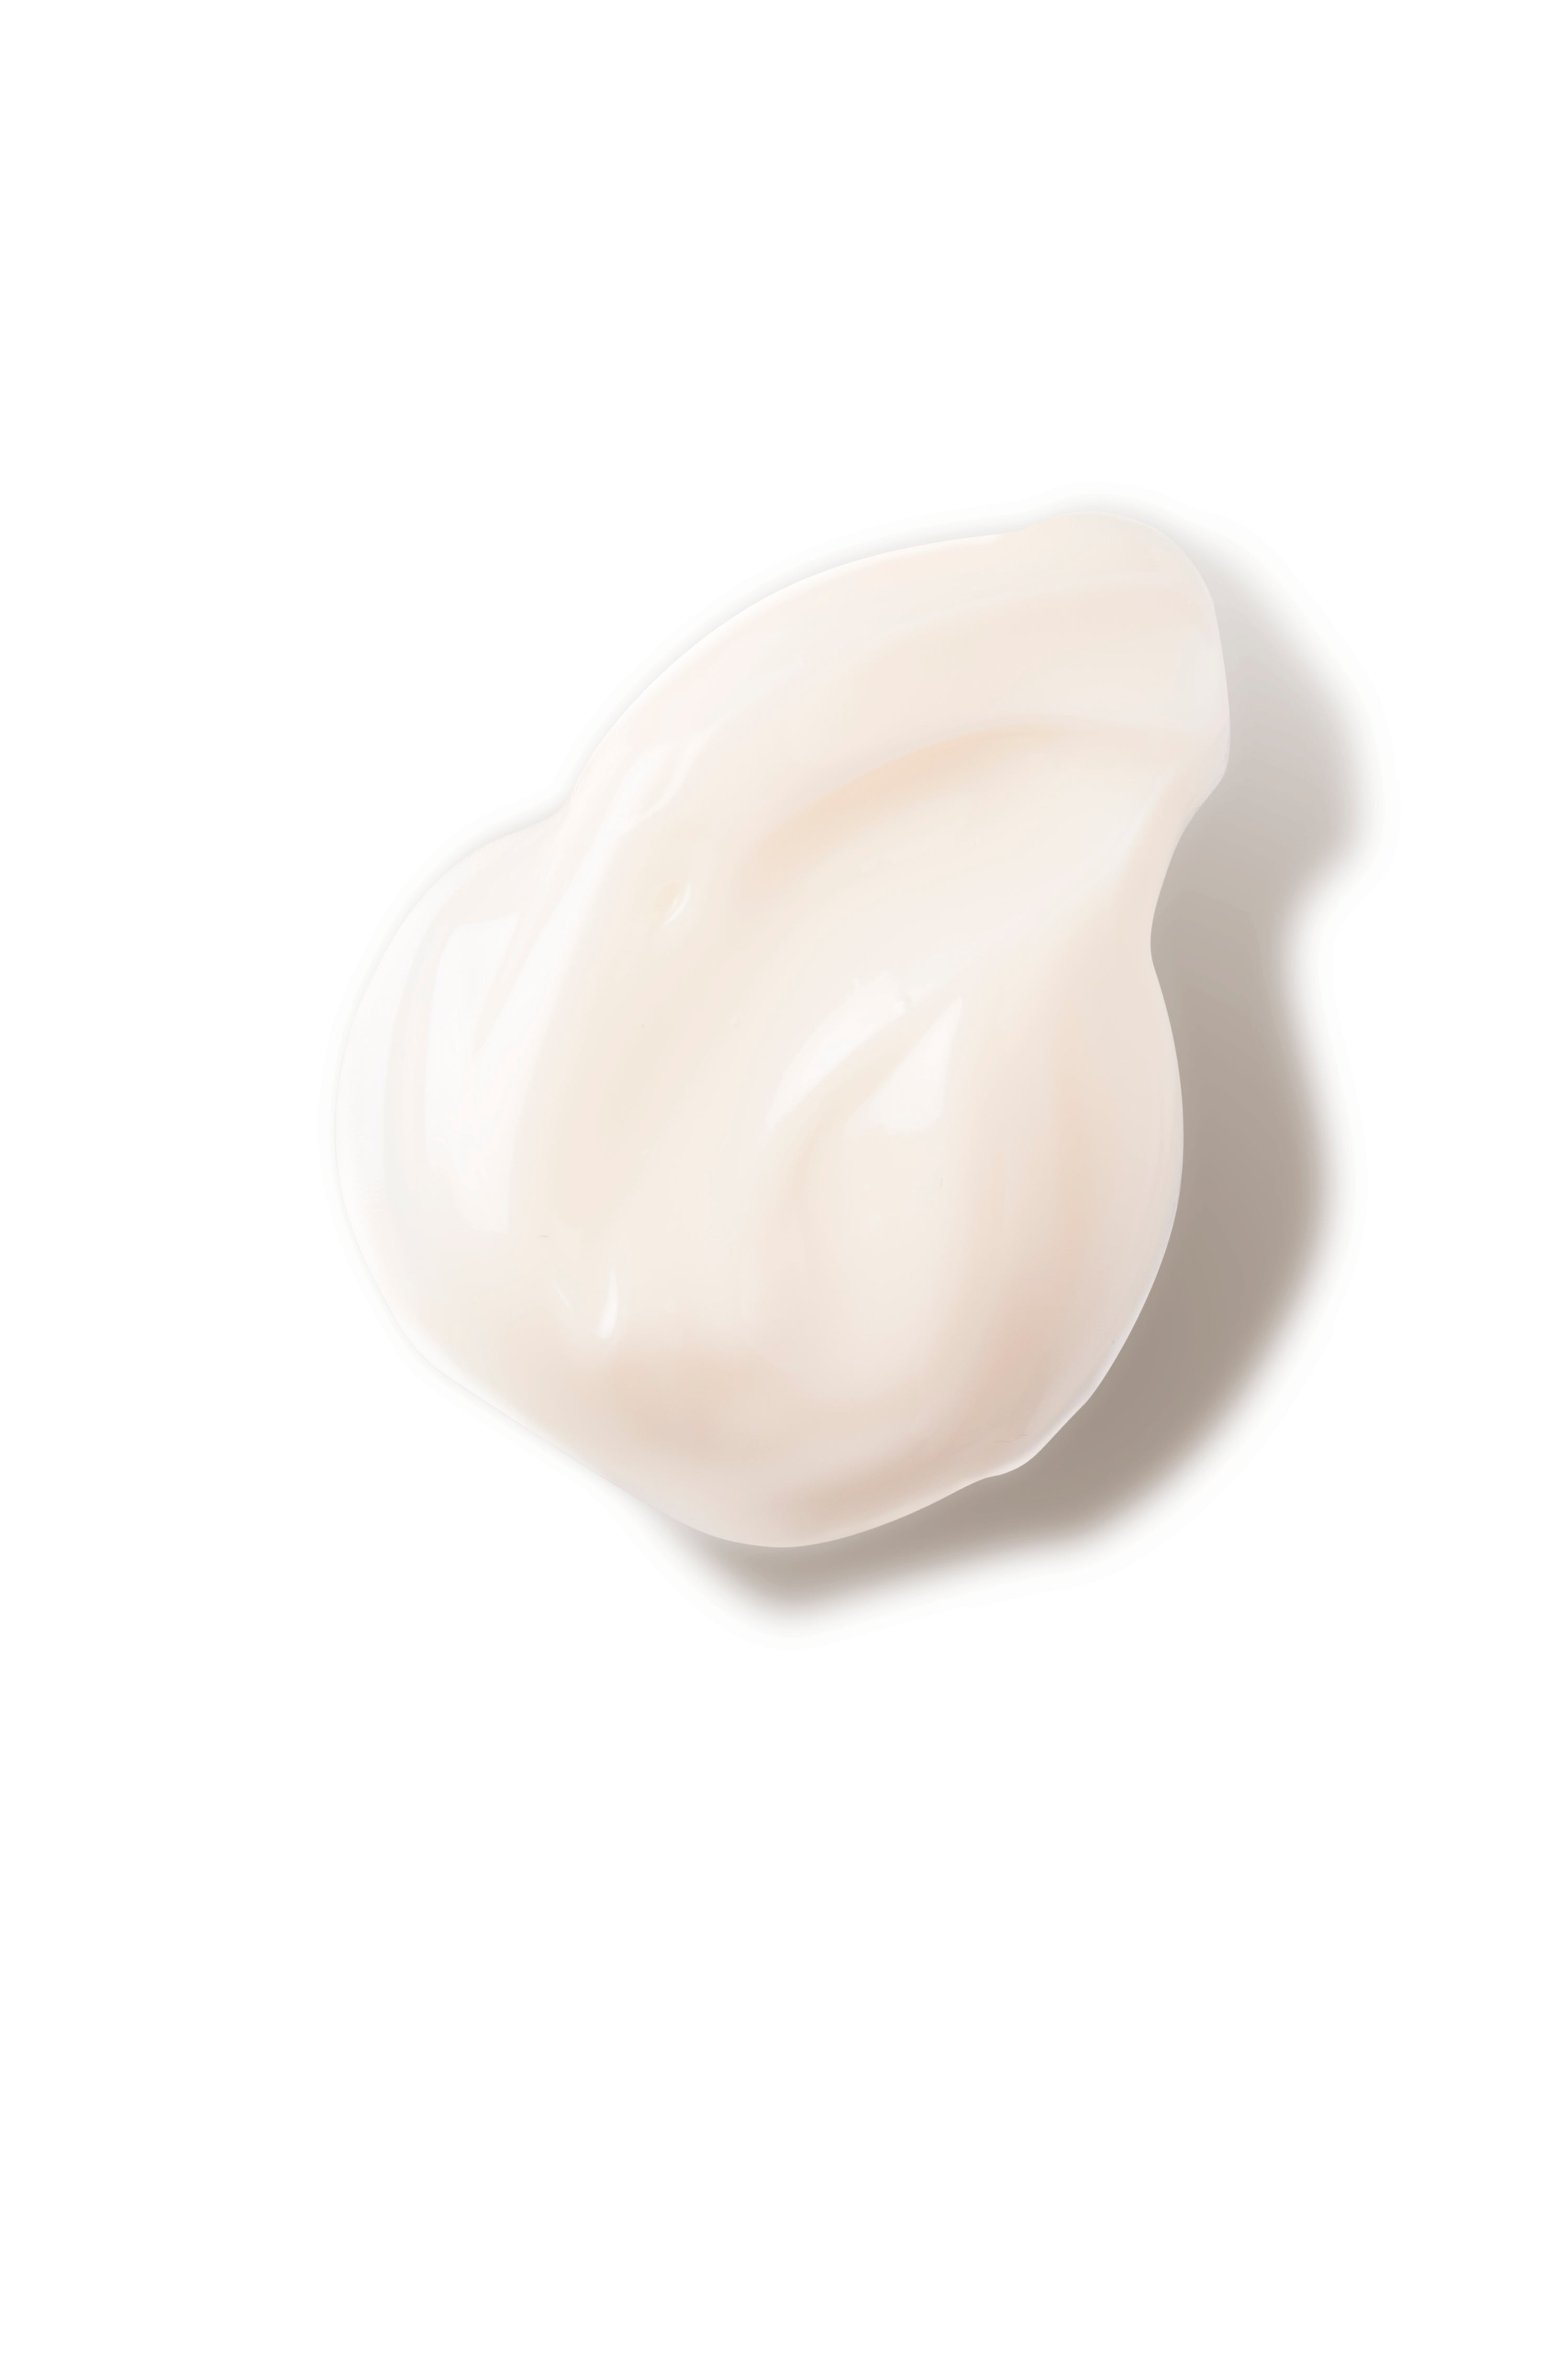 Erno Laszlo – White Marble Translucence Cream - Danae Profumeria